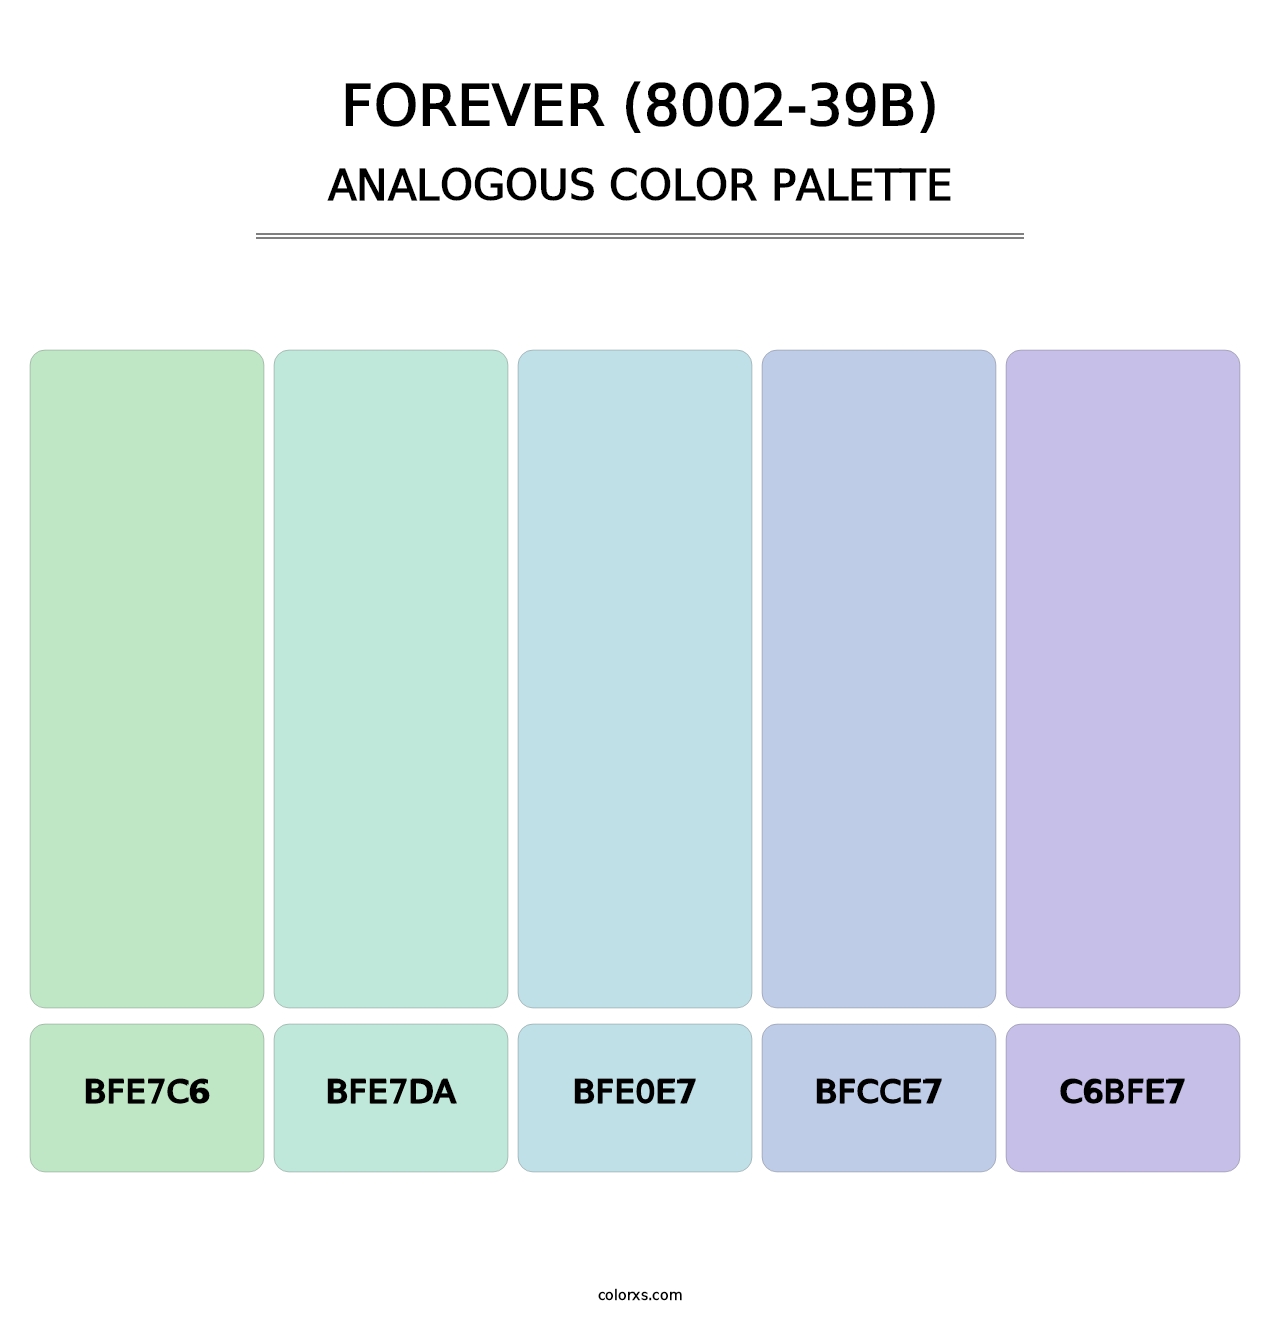 Forever (8002-39B) - Analogous Color Palette